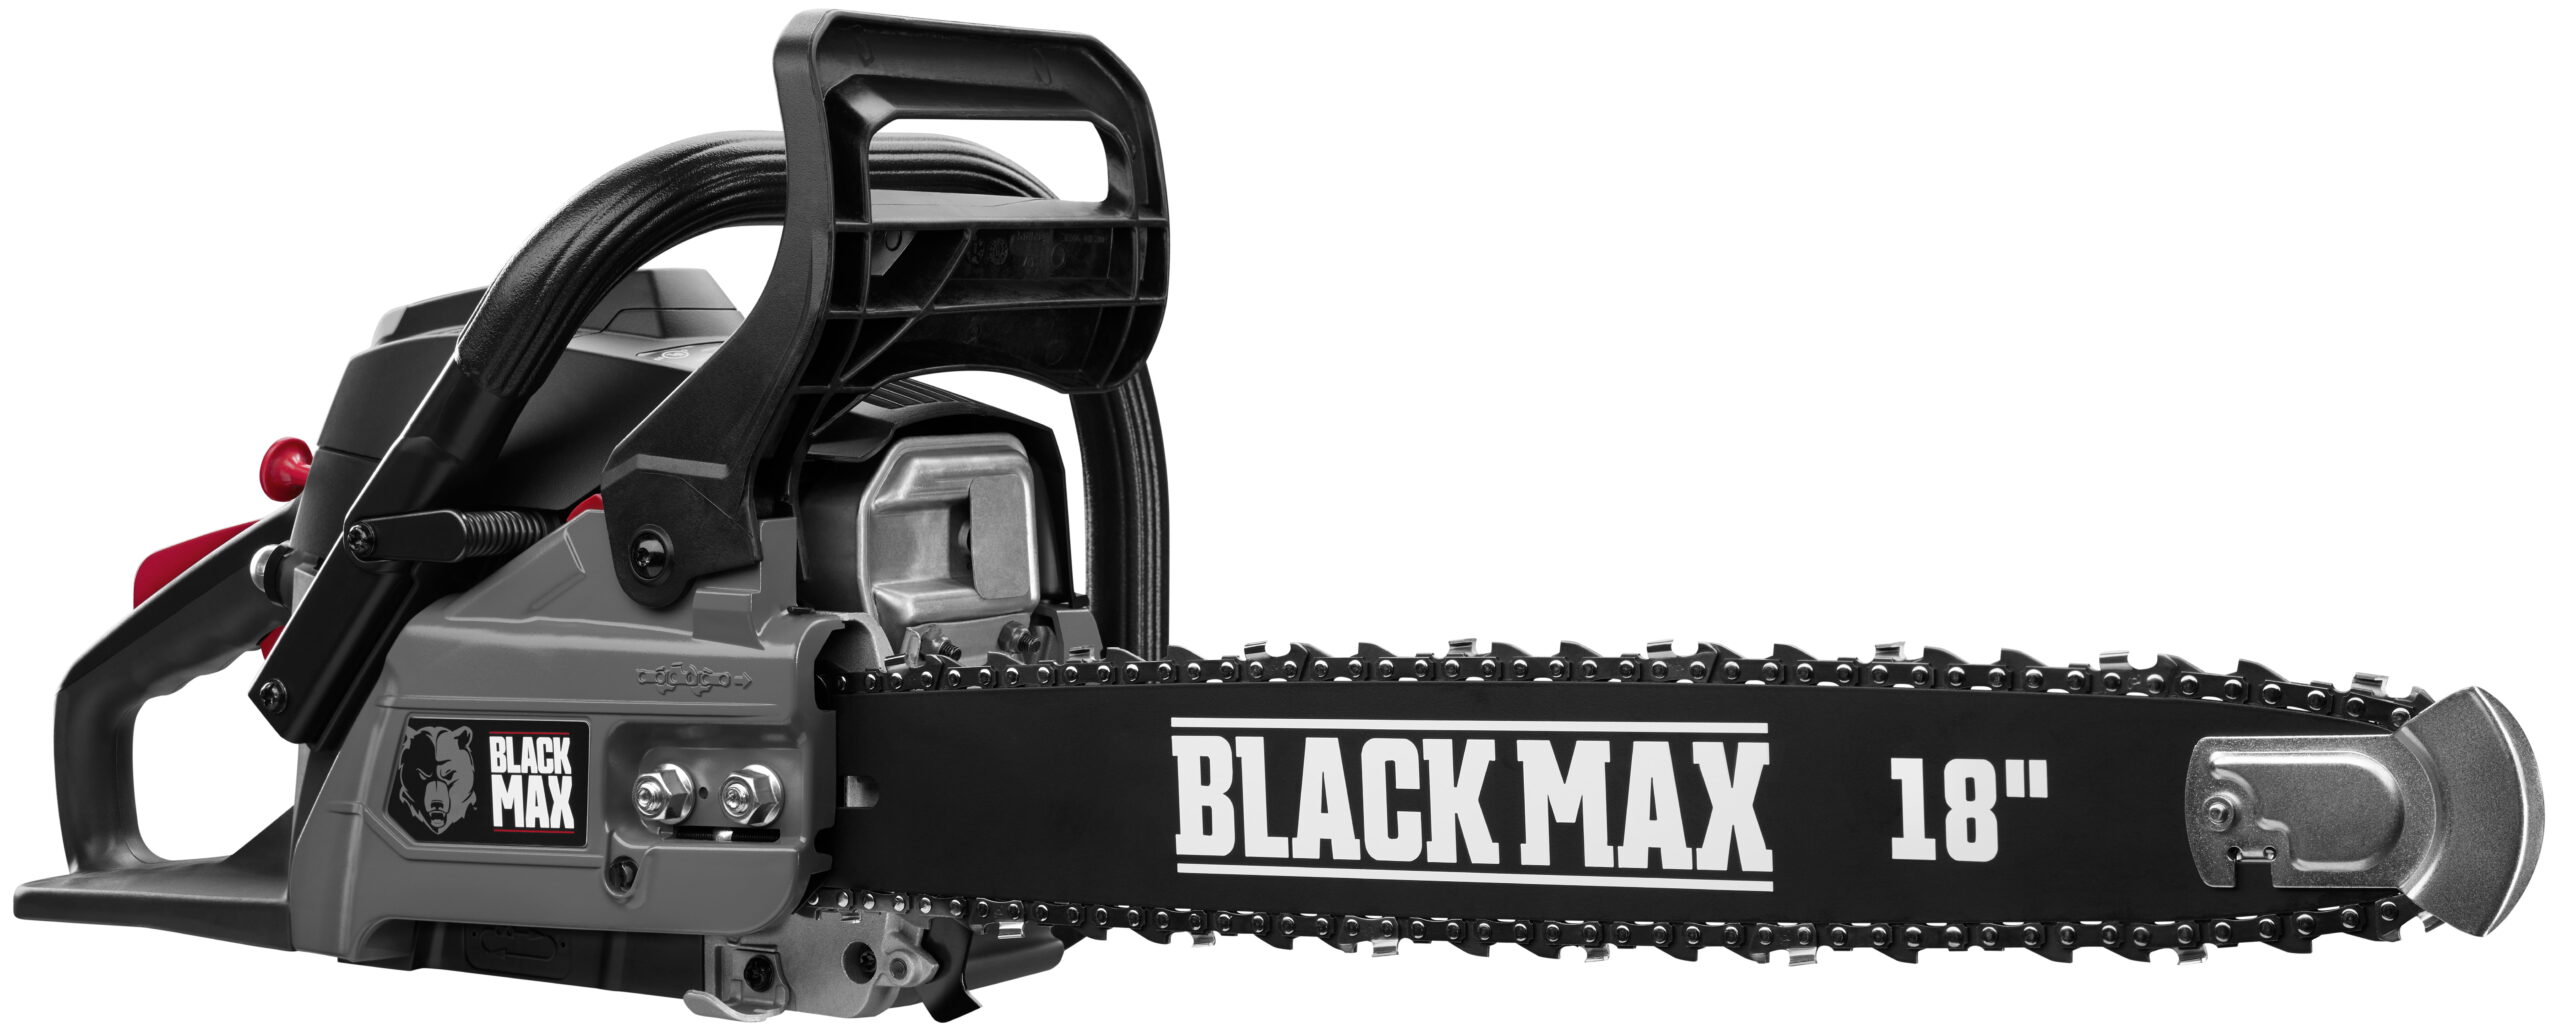 Blackmax  2-Cycle Blower/Vac